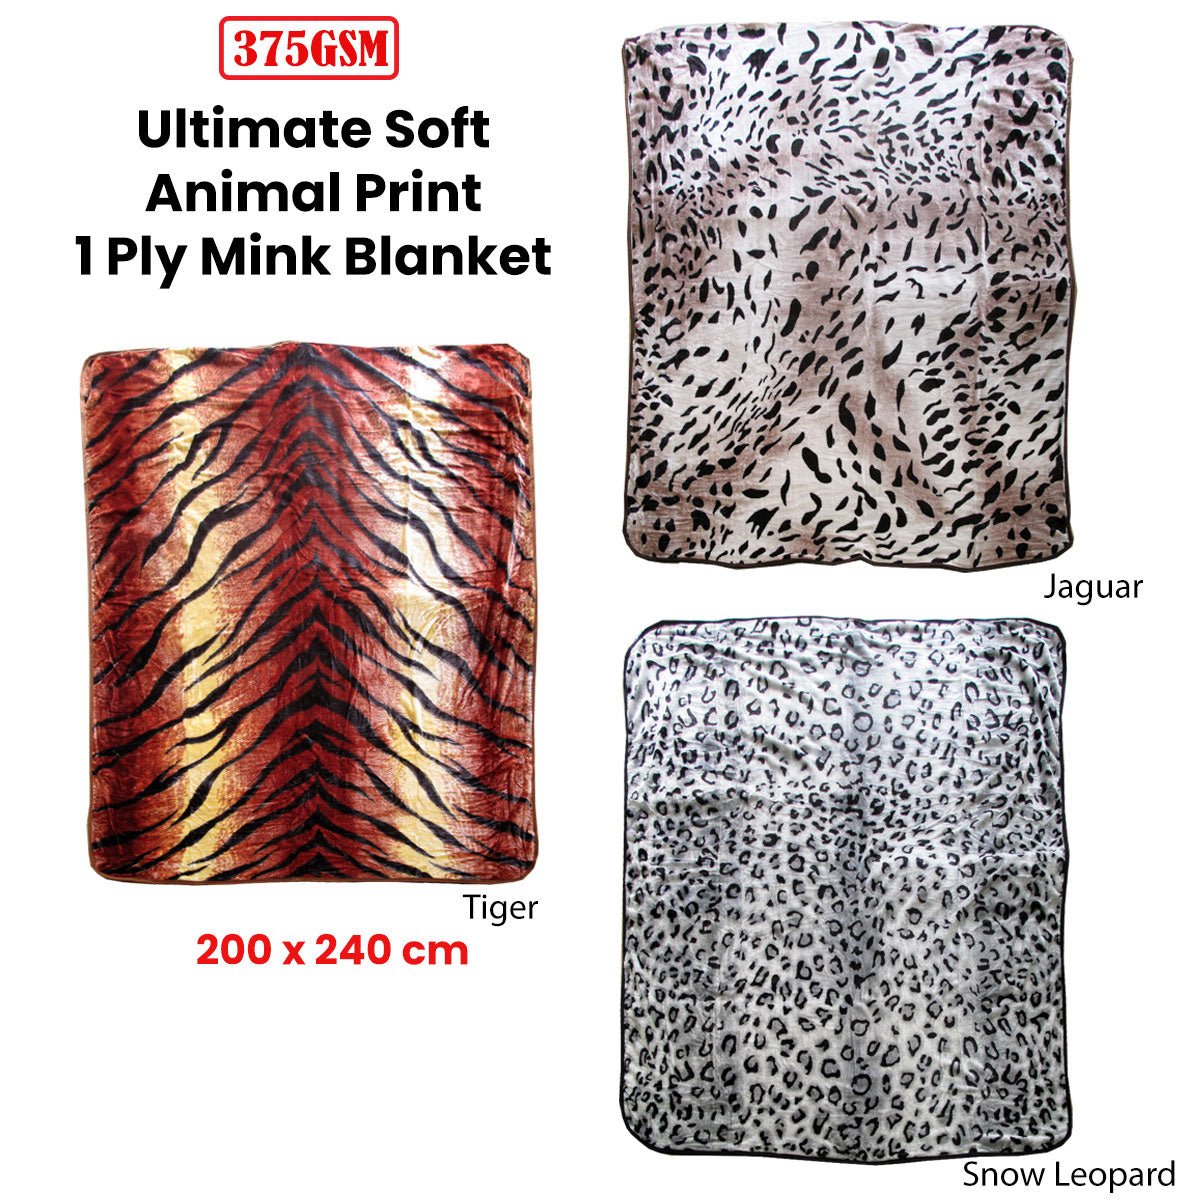 375gsm 1 Ply Animal Print Faux Mink Blanket Queen 200x240 cm Tiger - Newstart Furniture